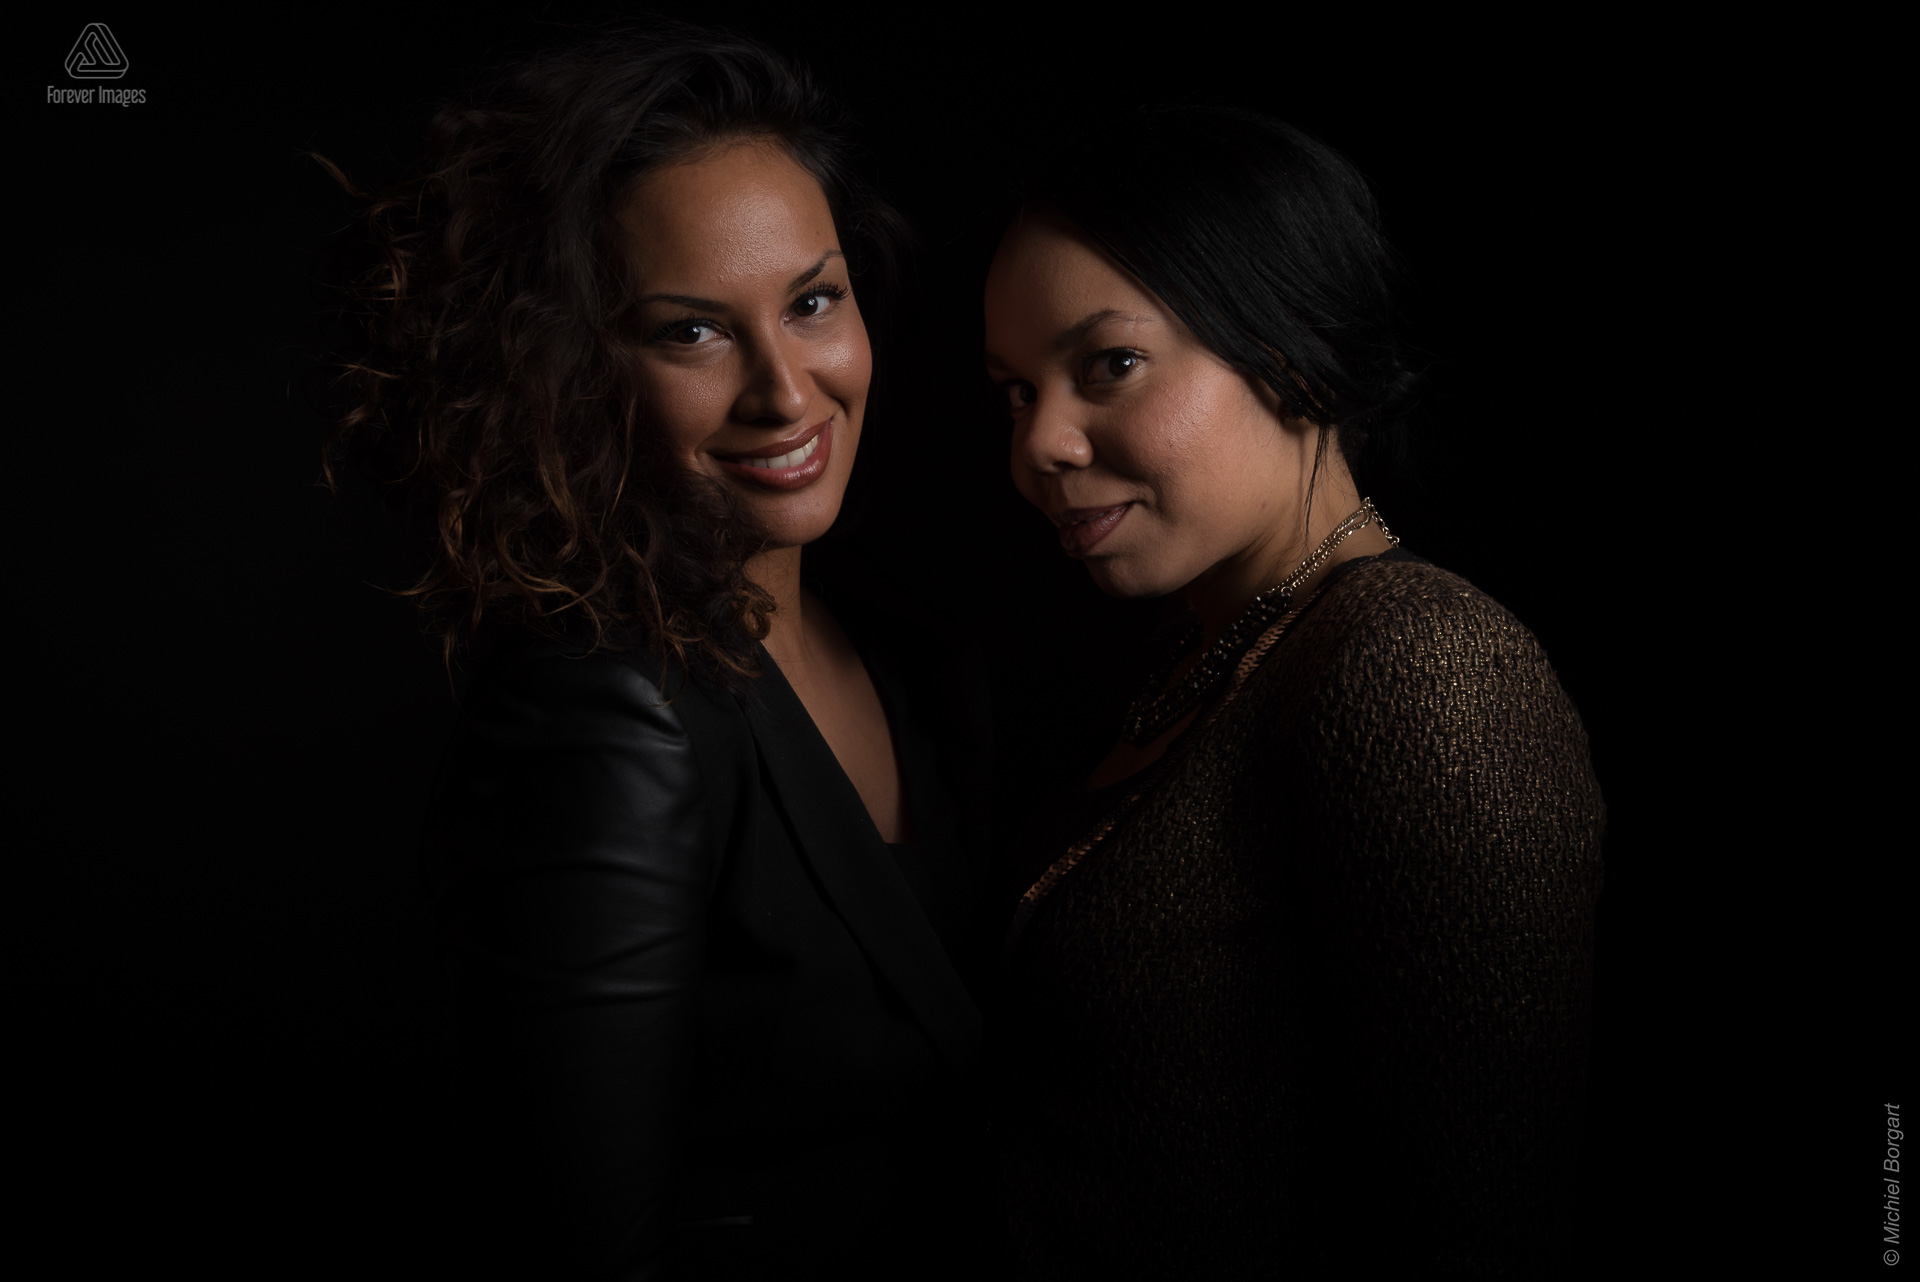 Portretfoto low-key film noir studio twee jonge dames lachend kijkend | Jessica Roos Jorgina Dalnoot | Portretfotograaf Michiel Borgart - Forever Images.